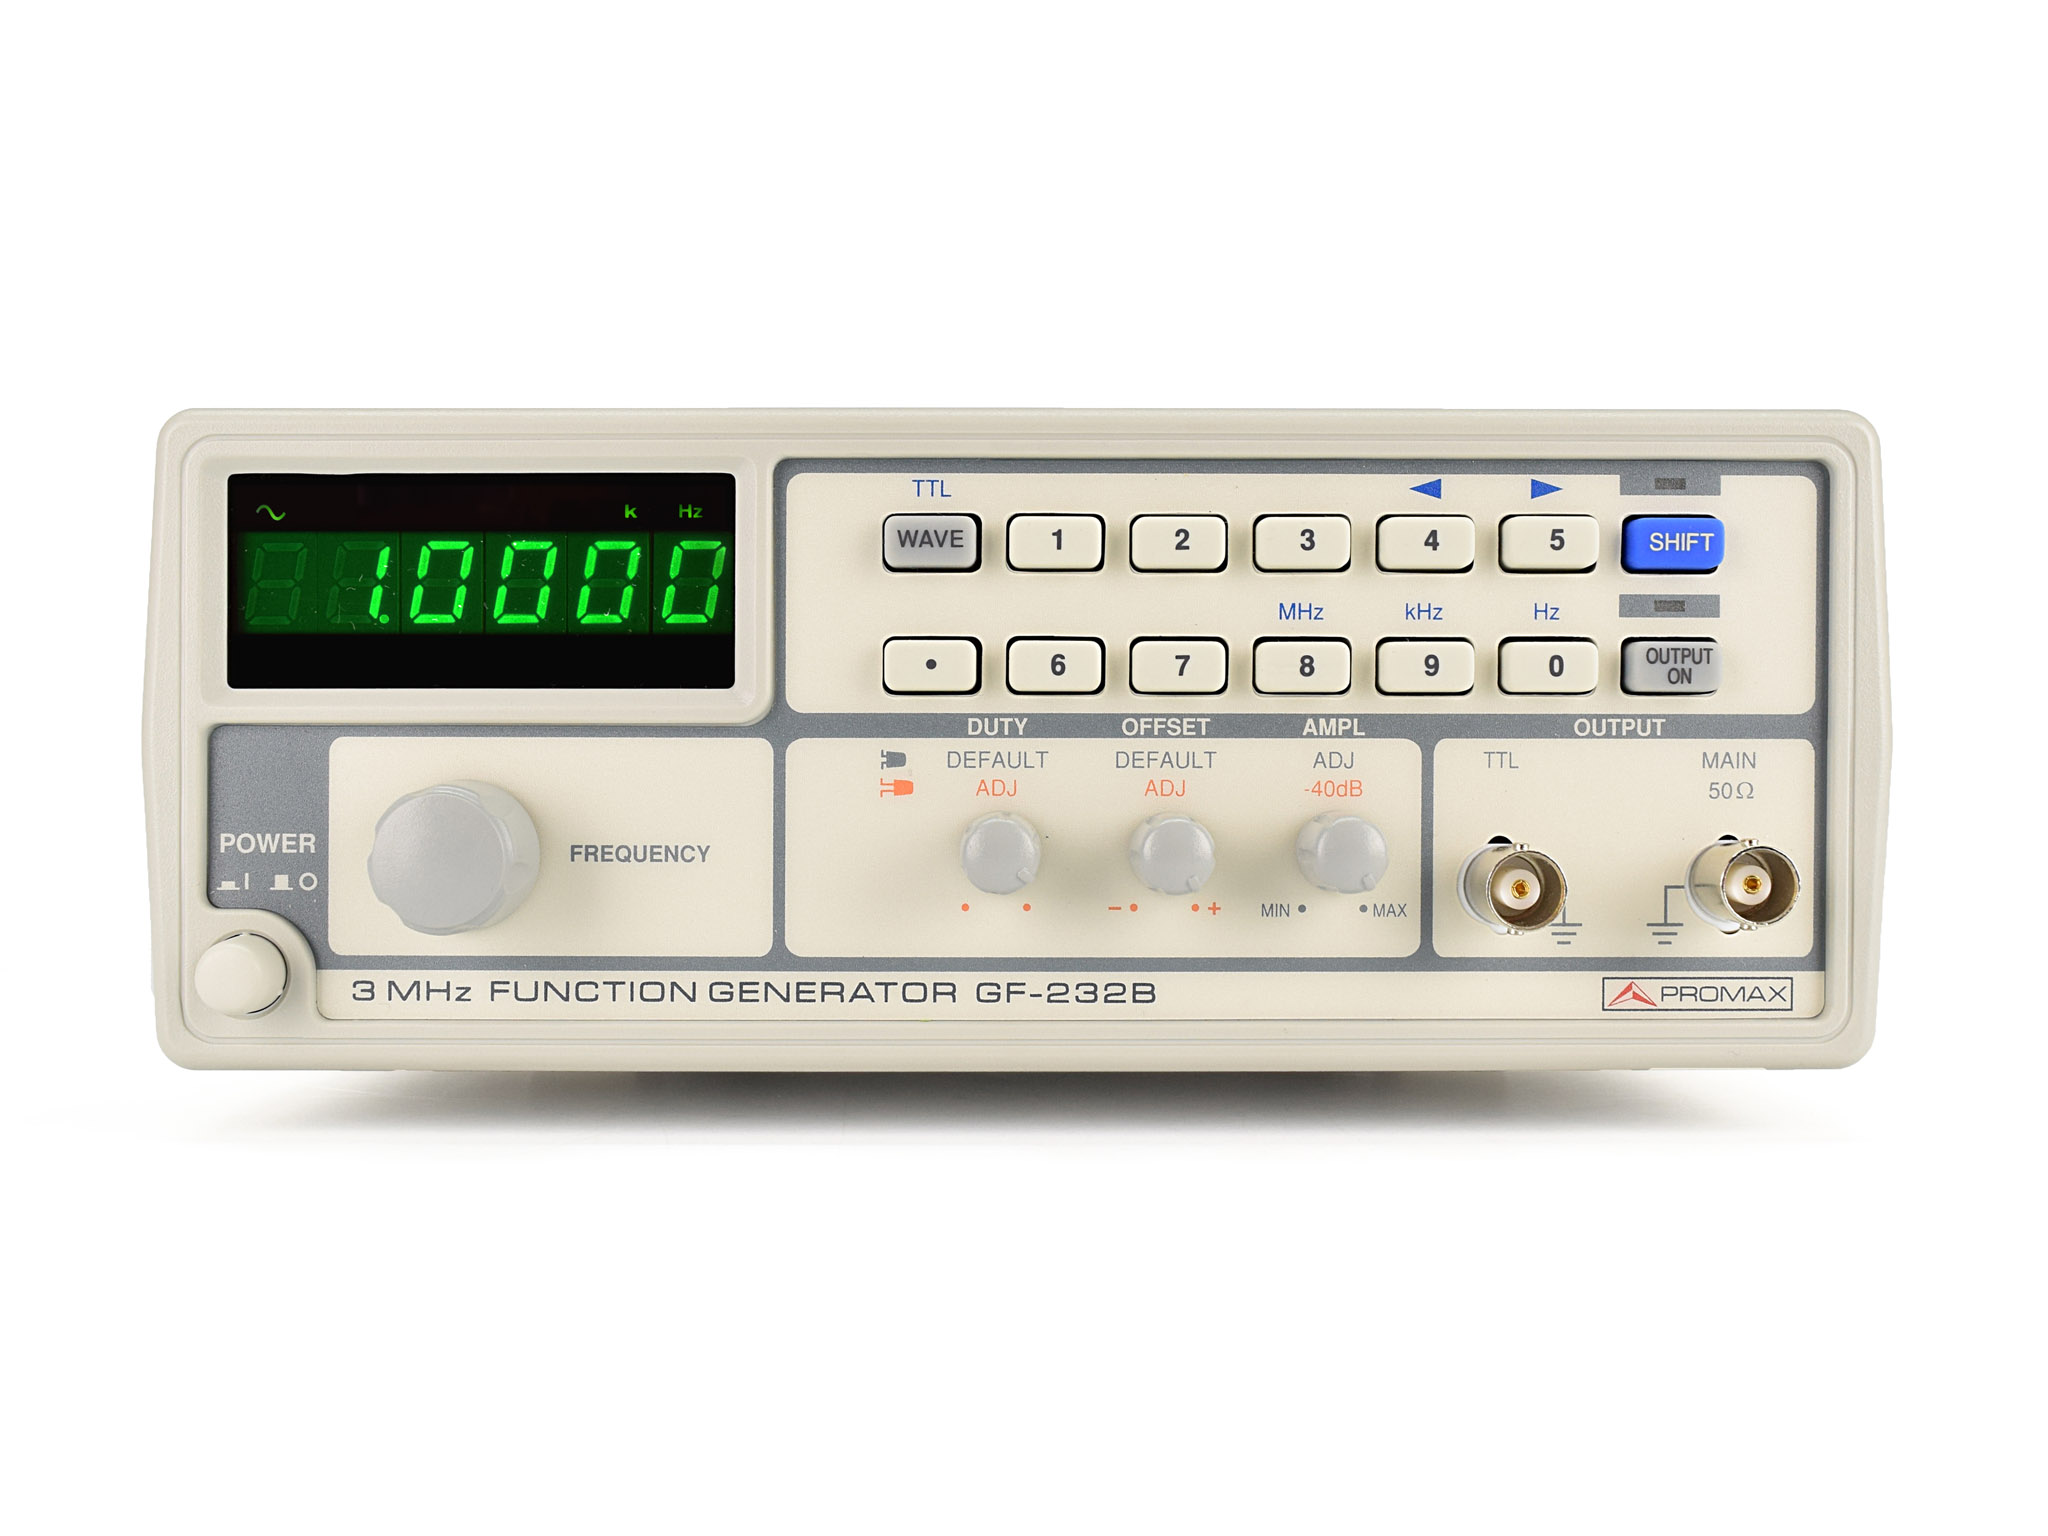 GF-232B: 3 MHz function generator